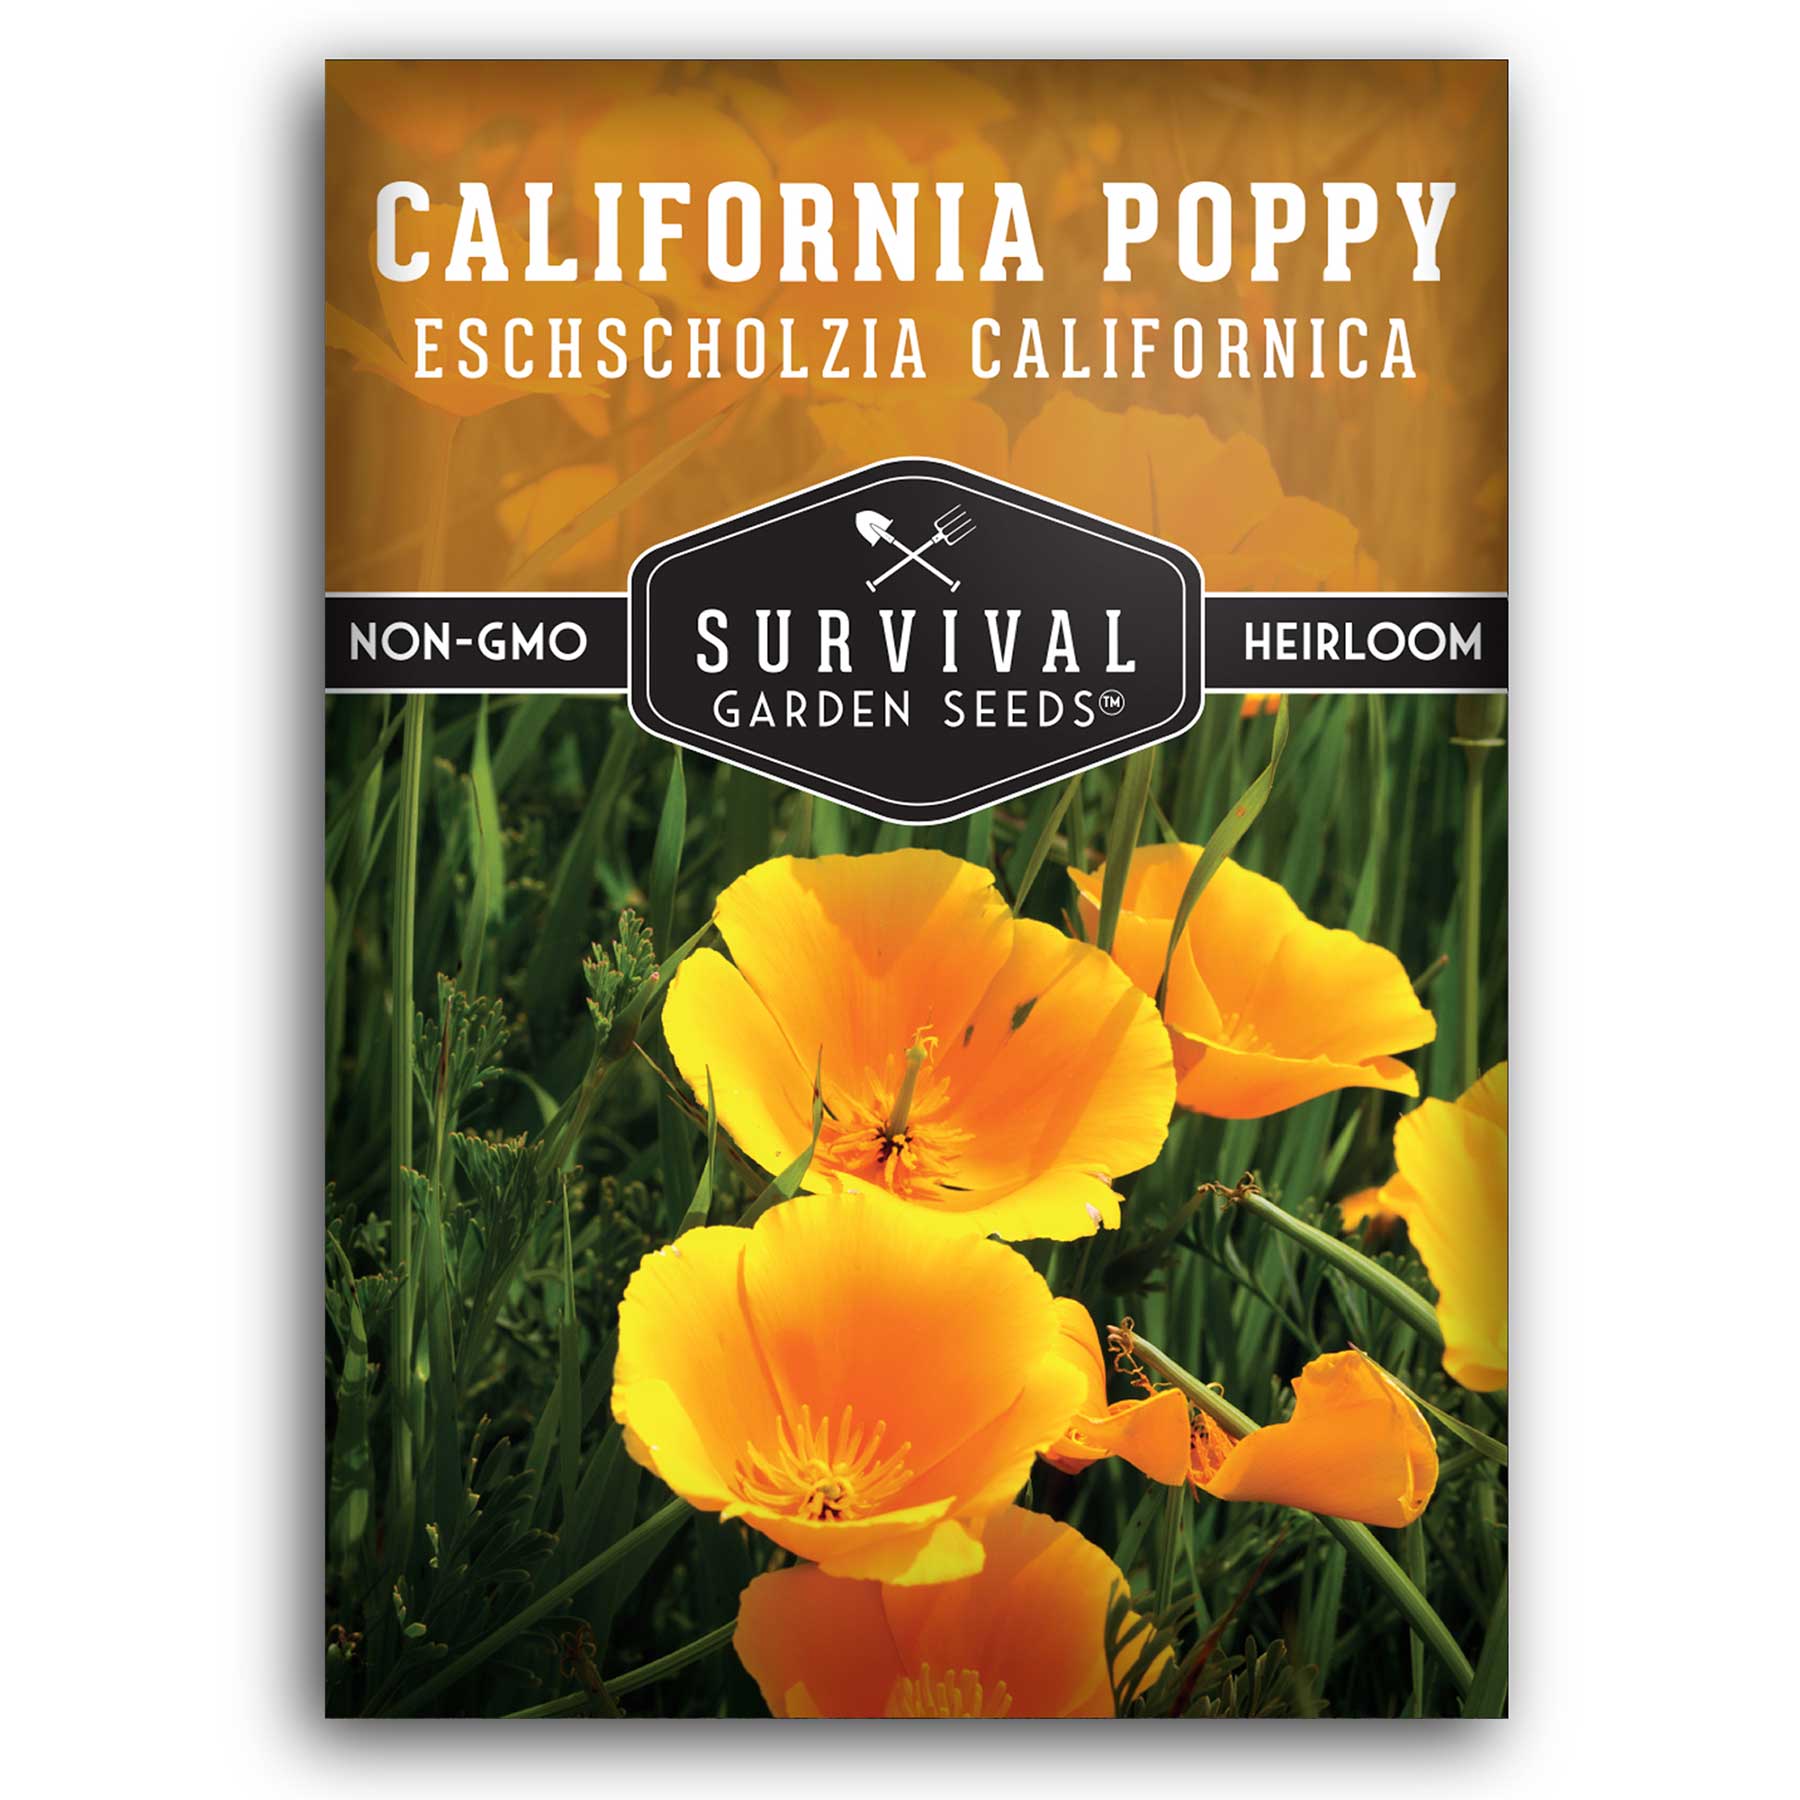 California Poppy seeds for planting